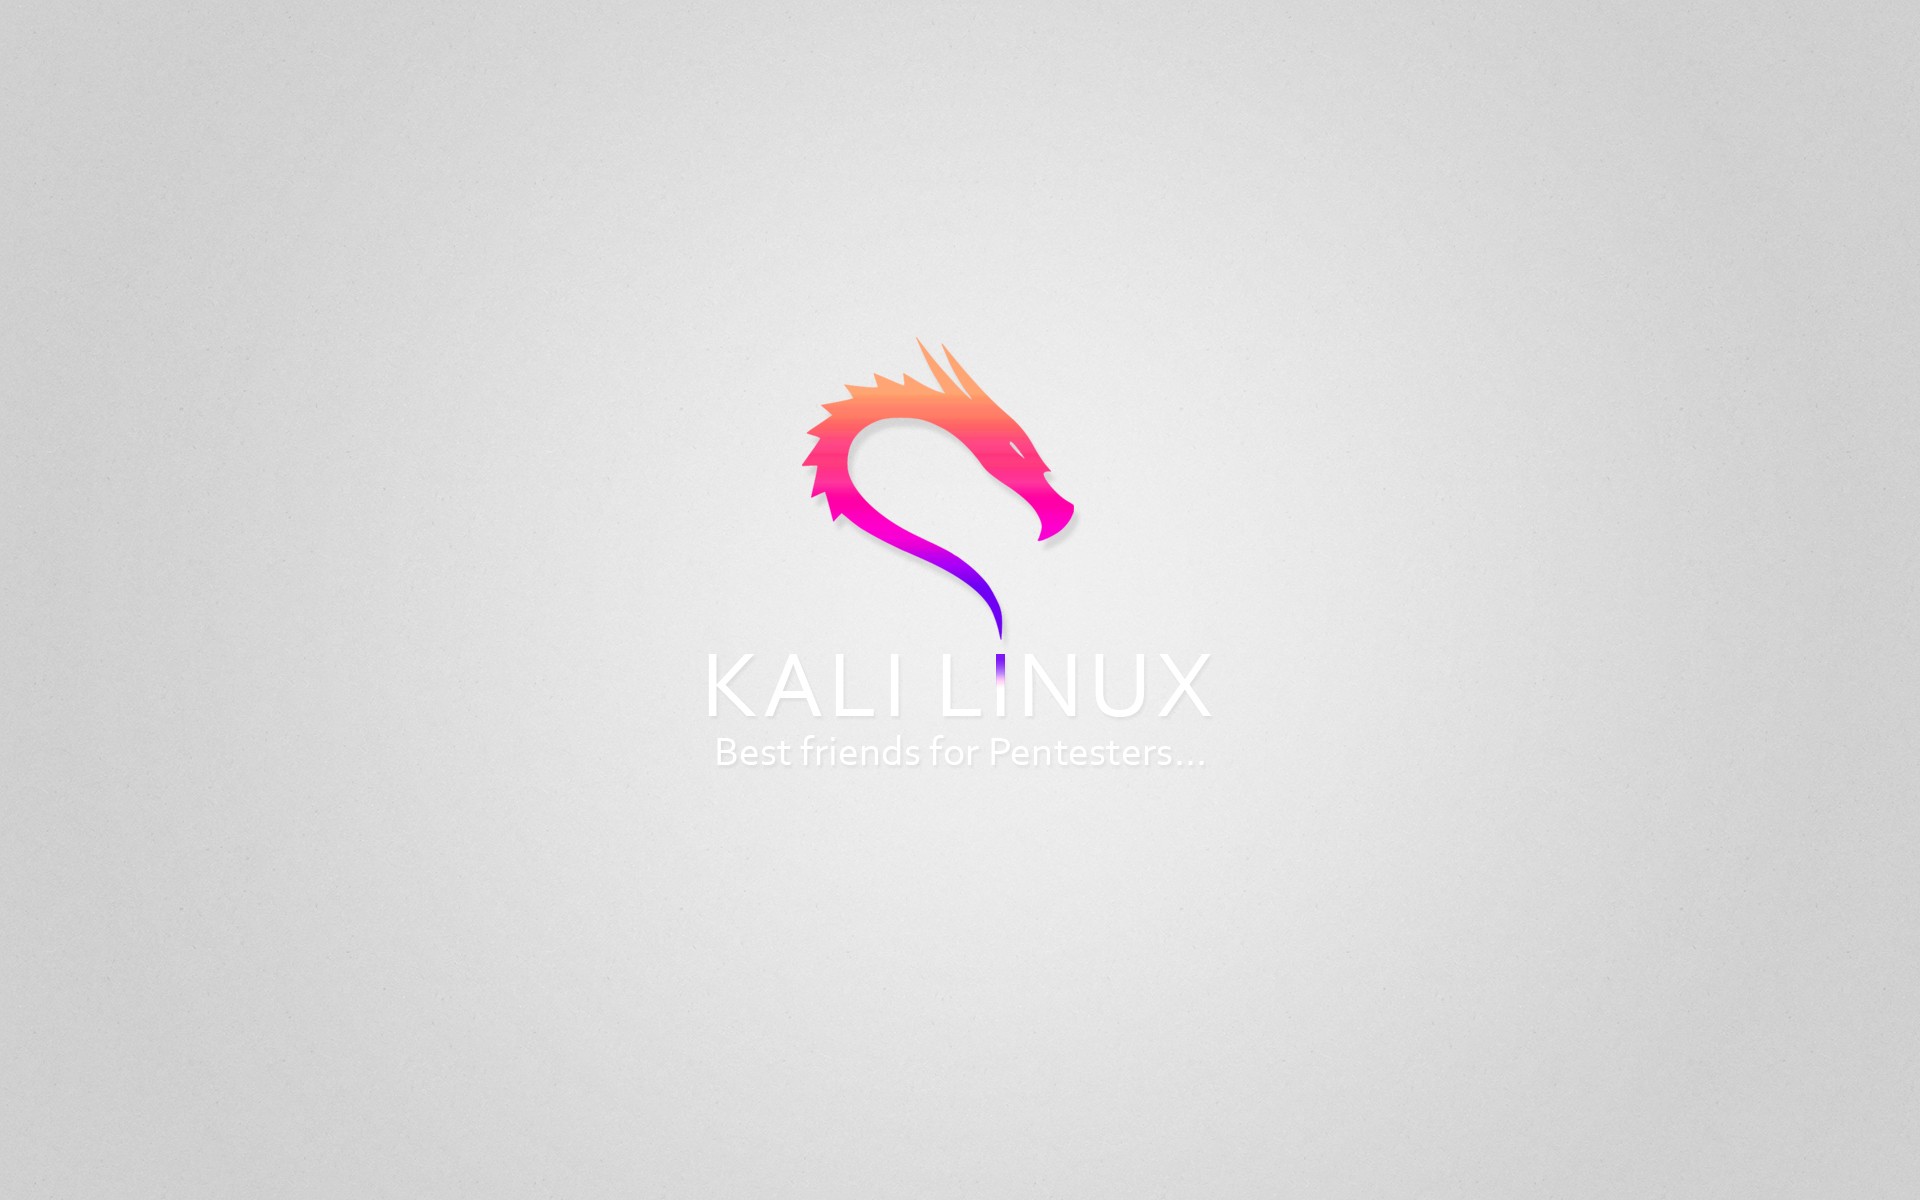 General 1920x1200 Kali Linux Linux computer minimalism typography logo hacking hackers security CGI